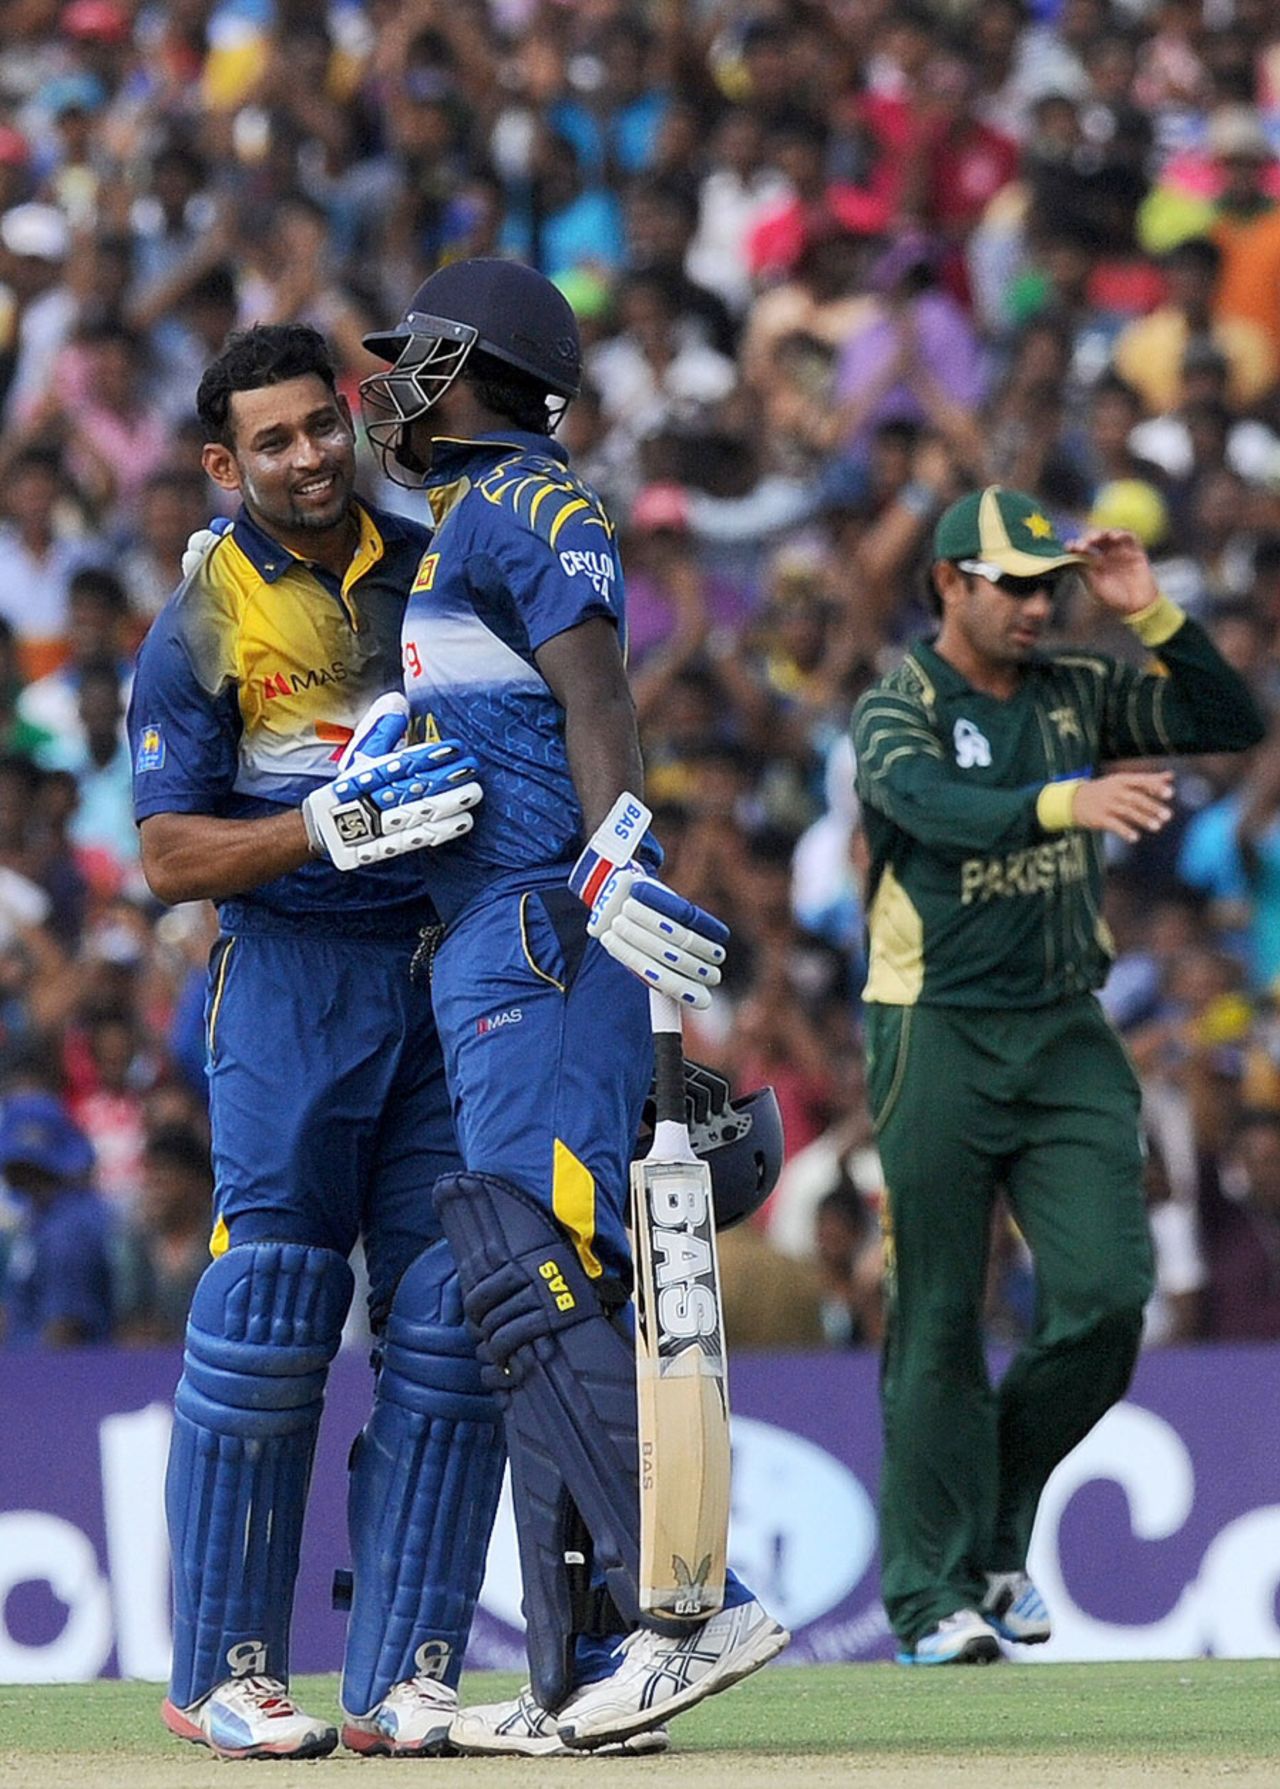 Tillakaratne Dilshan and Angelo Mathews embrace after Sri Lanka's win, Sri Lanka v Pakistan, 3rd ODI, Dambulla, August 30, 2014